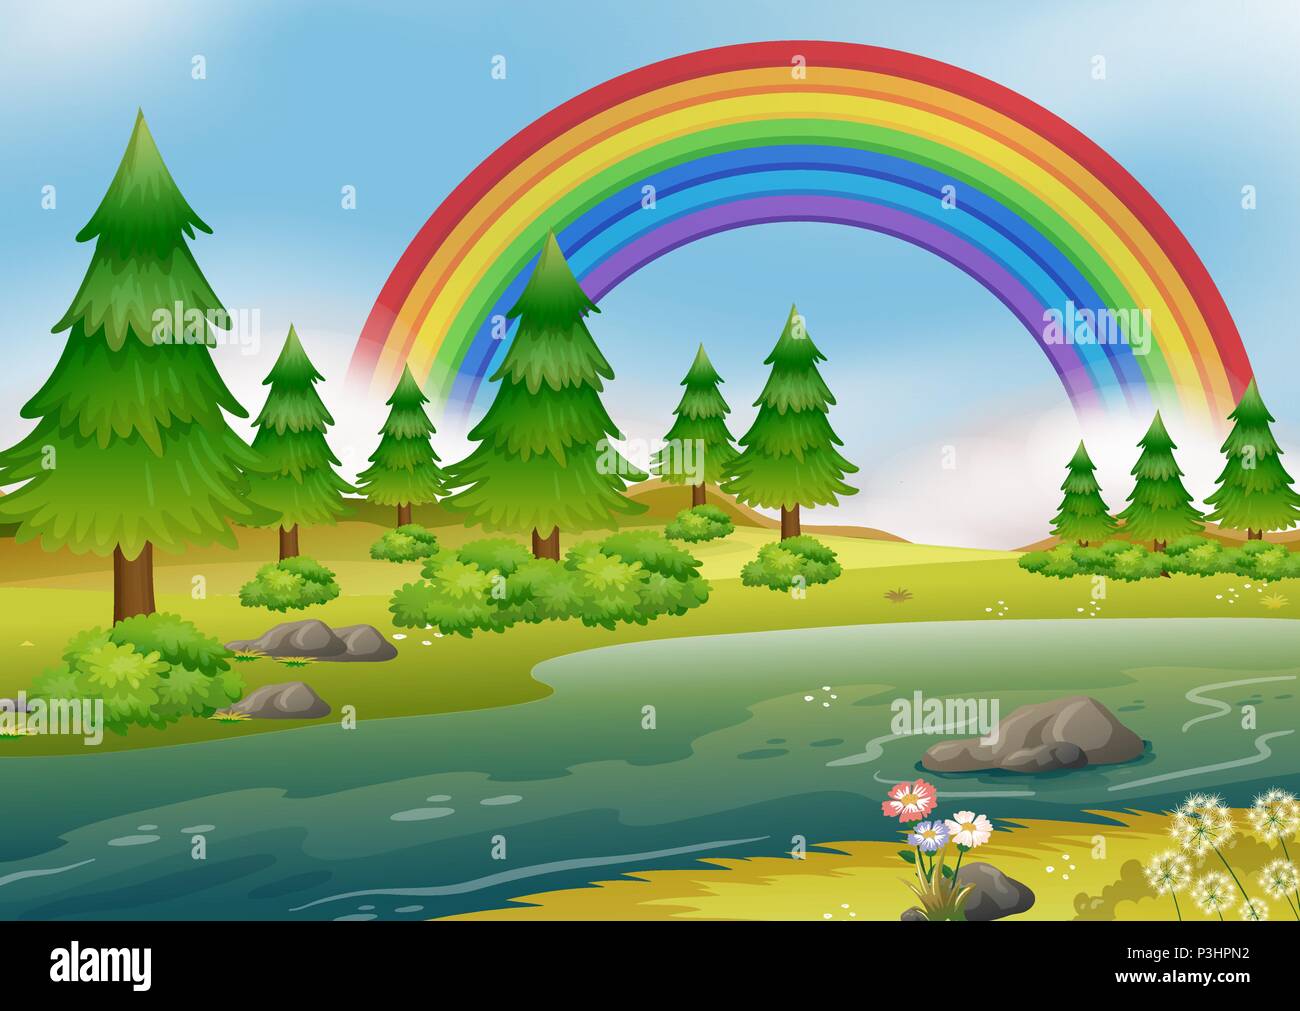 A Beautiful Rainbow River Landscape illustration Stock Vector ...